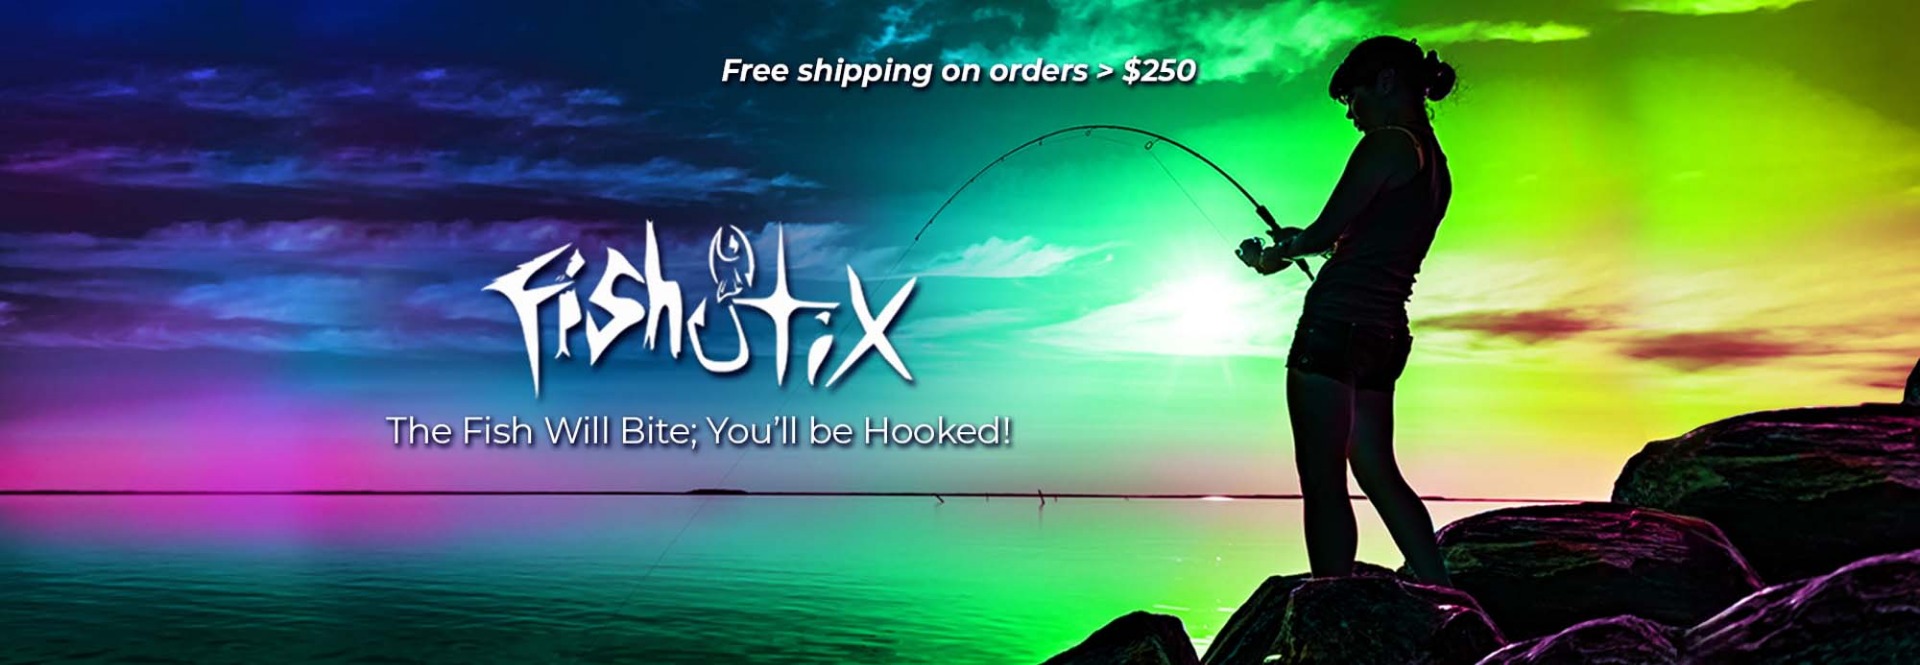 Custom Fishing Rod Decals - Free Shipping